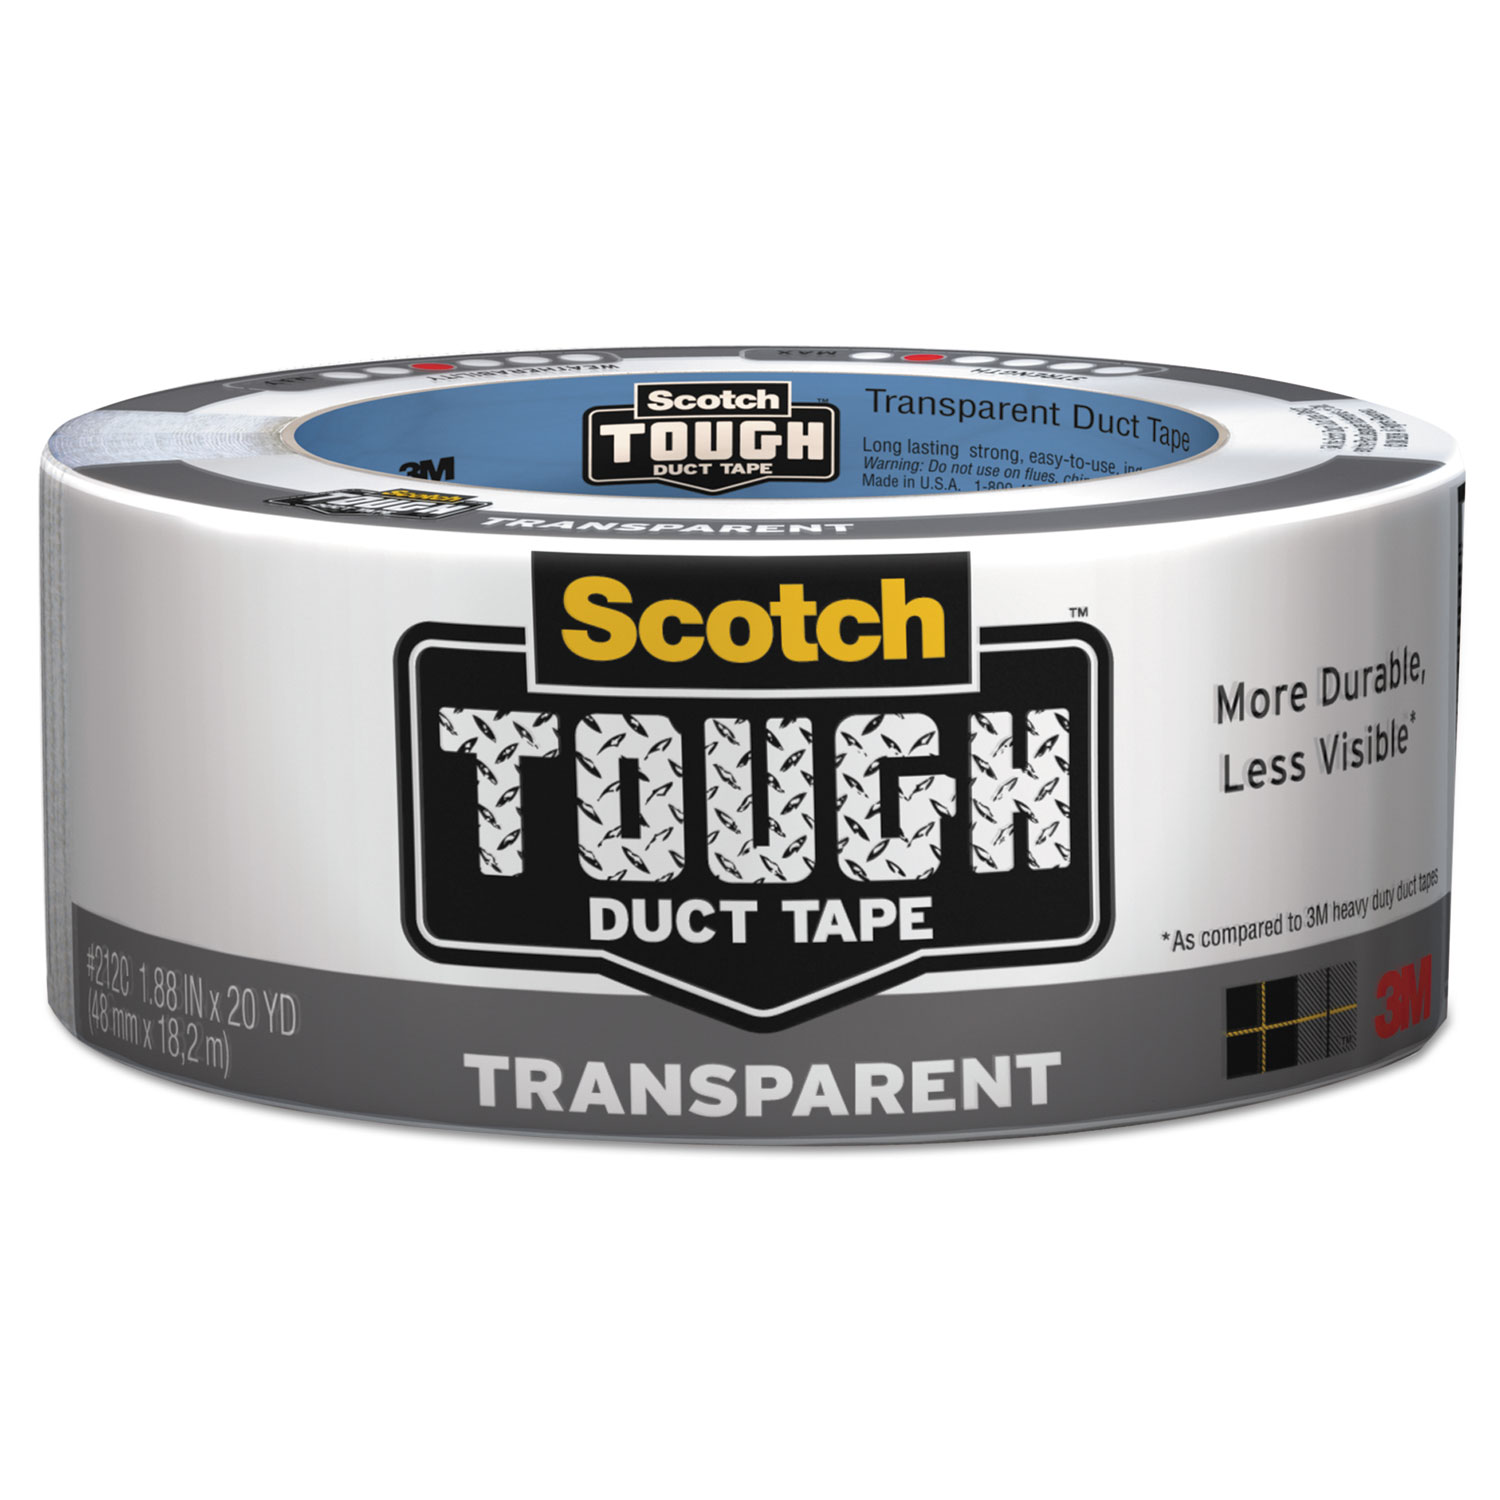 Tough Duct Tape - Transparent, 1.88 x 20yds, Clear